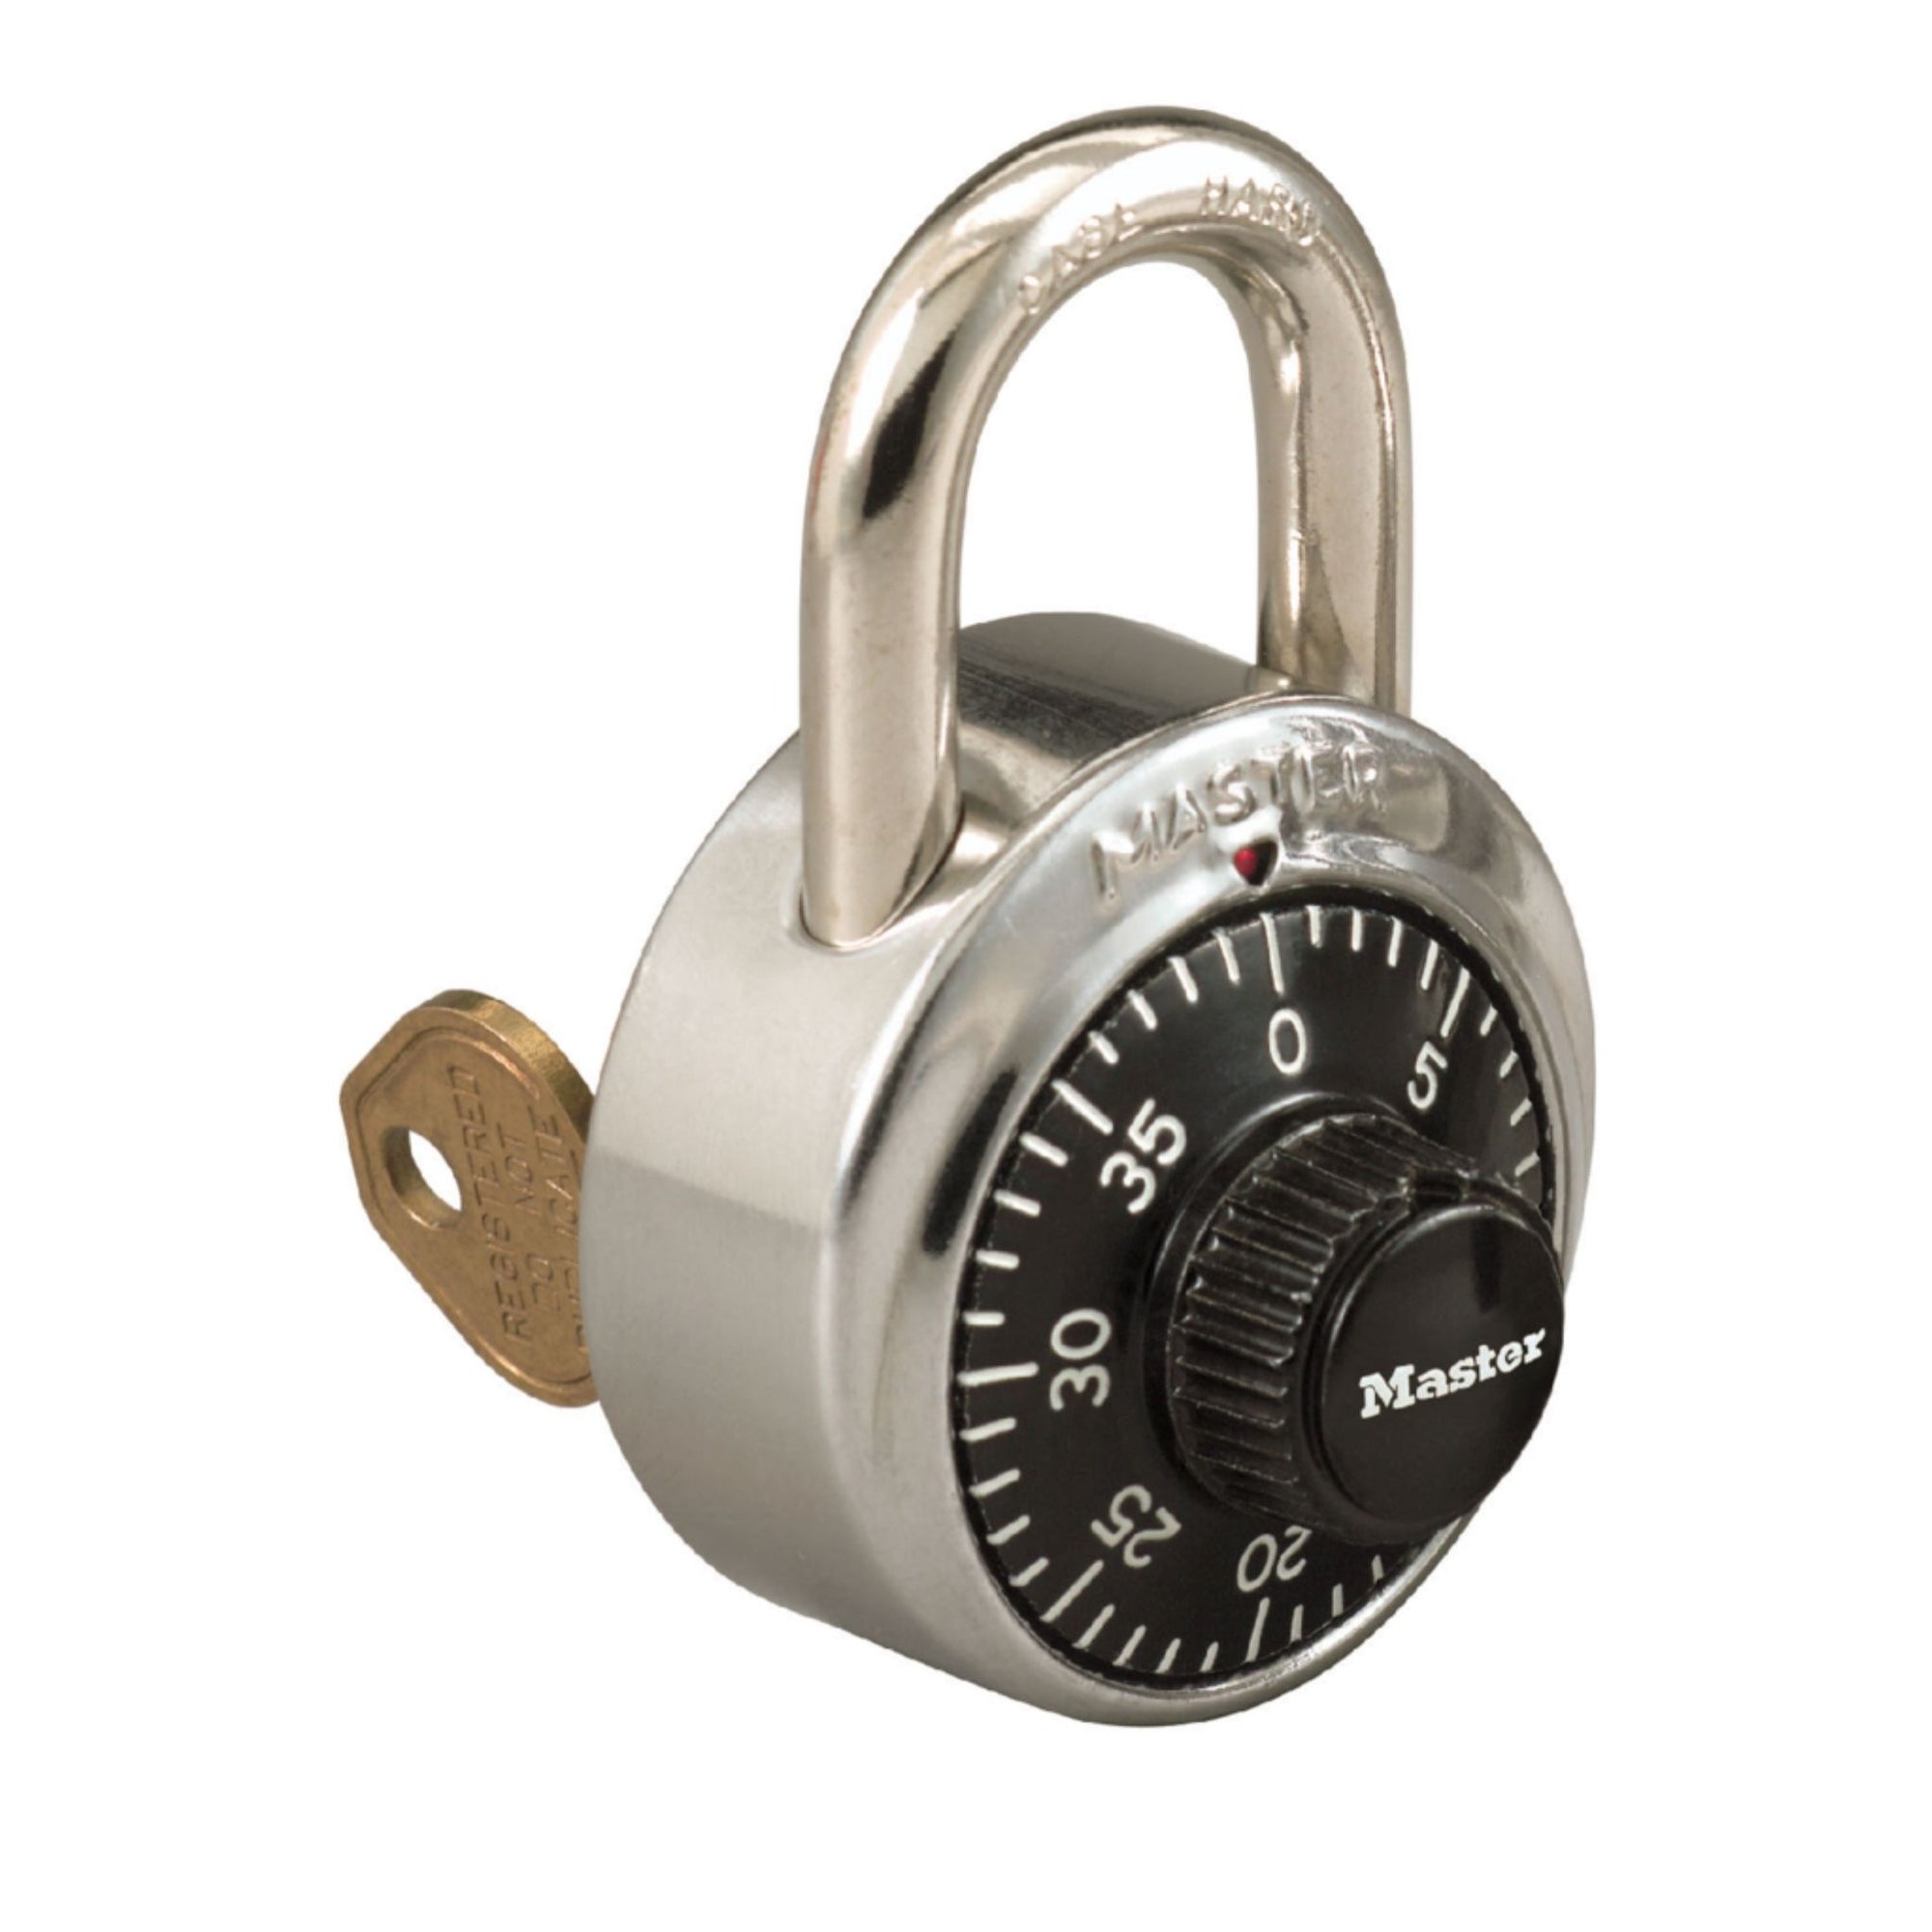 Master Lock 1525 Locker Lock with Key Control - The Lock Source